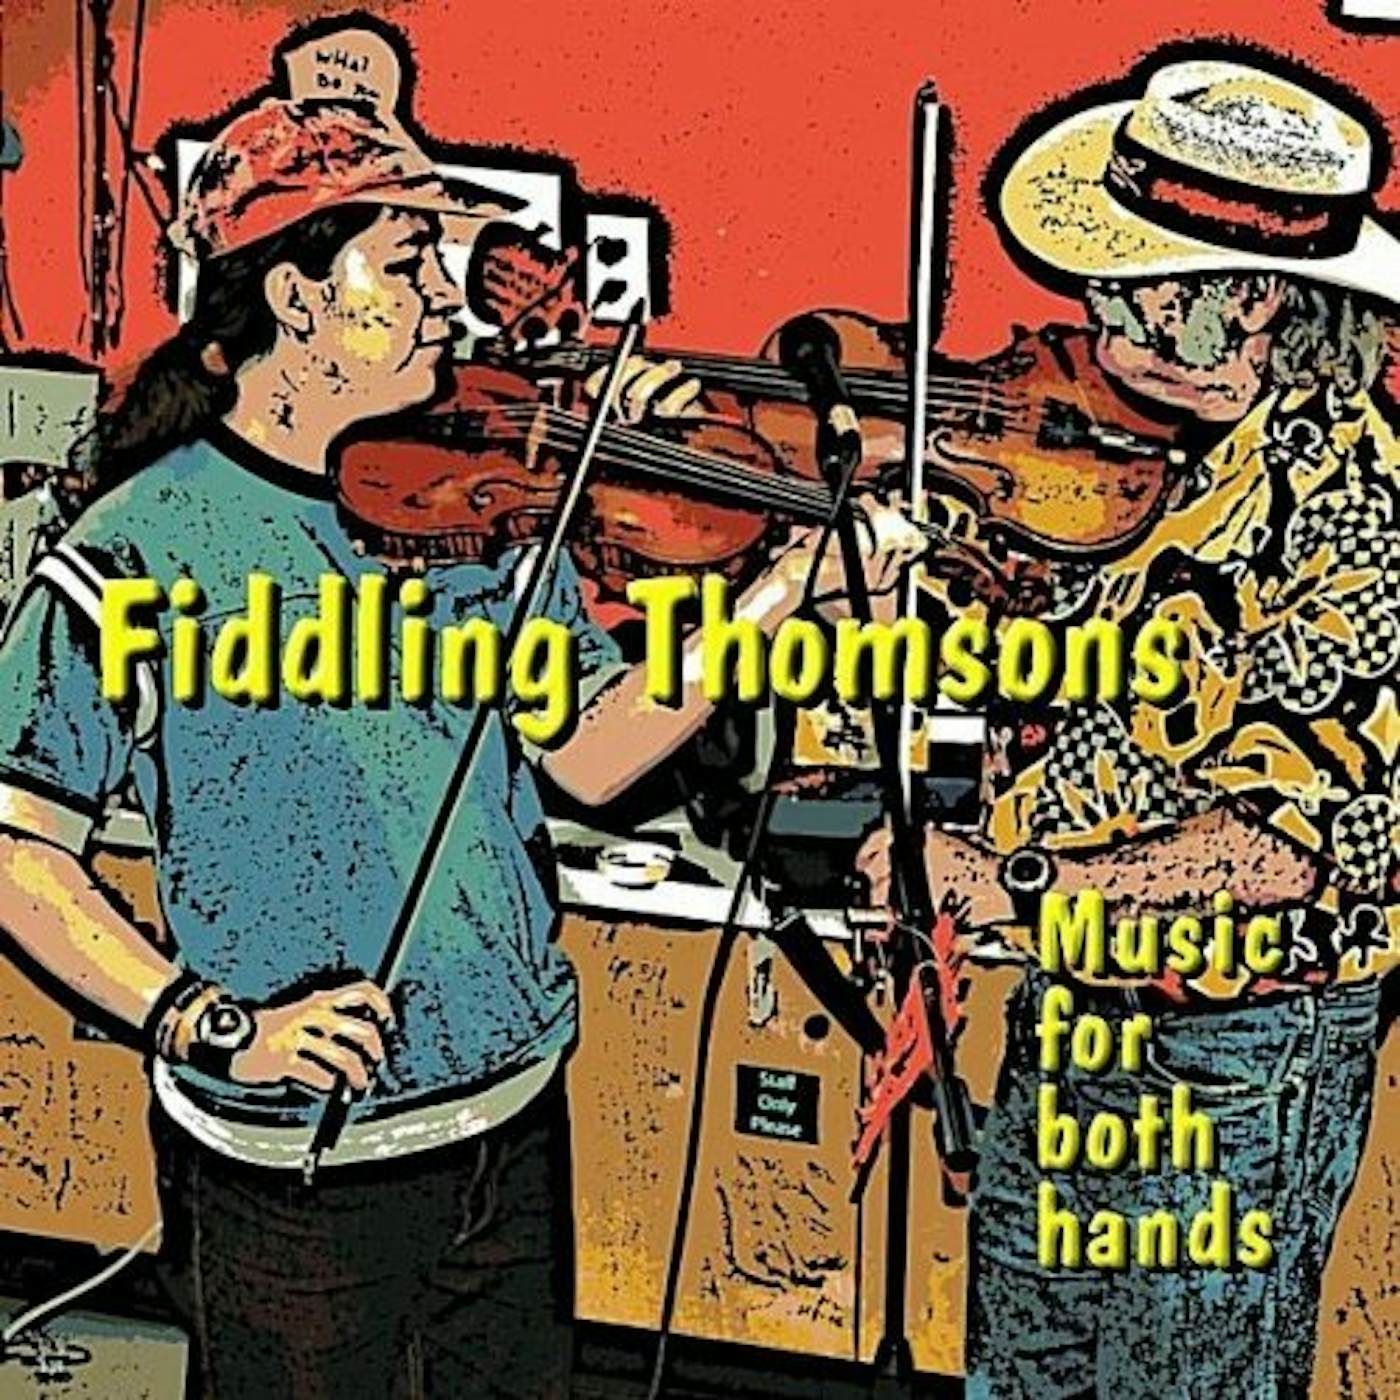 Ryan Thomson FIDDLING THOMSONS MUSIC FOR BOTH HANDS CD